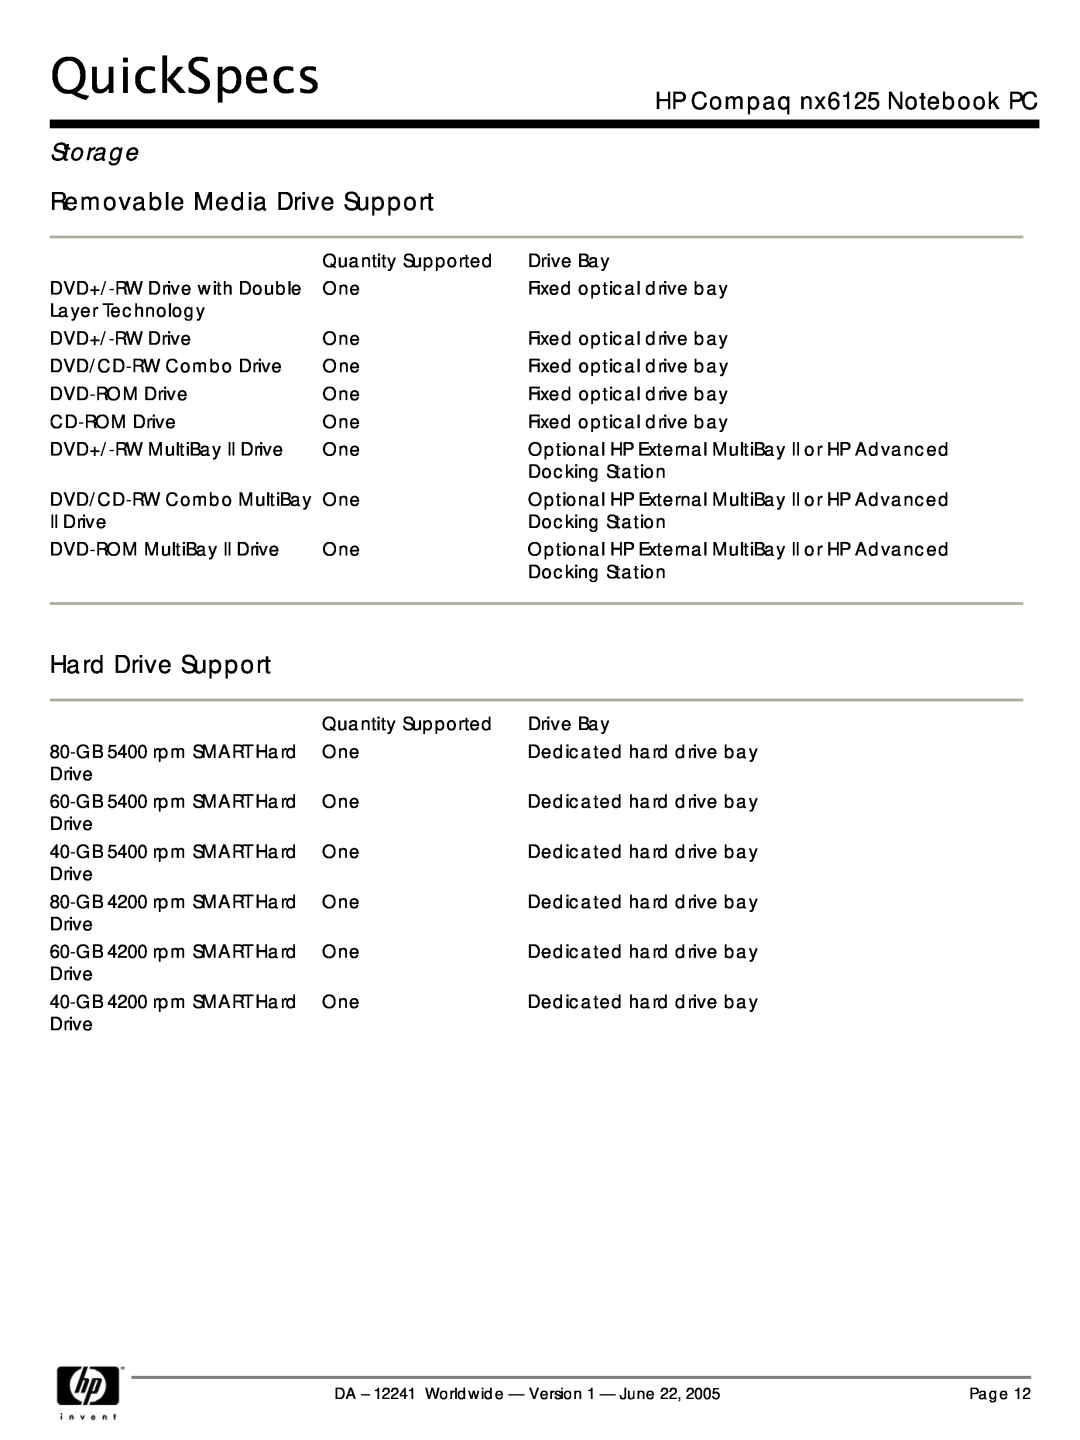 AMD DA - 12241 manual Removable Media Drive Support, Hard Drive Support, Storage, QuickSpecs, HP Compaq nx6125 Notebook PC 